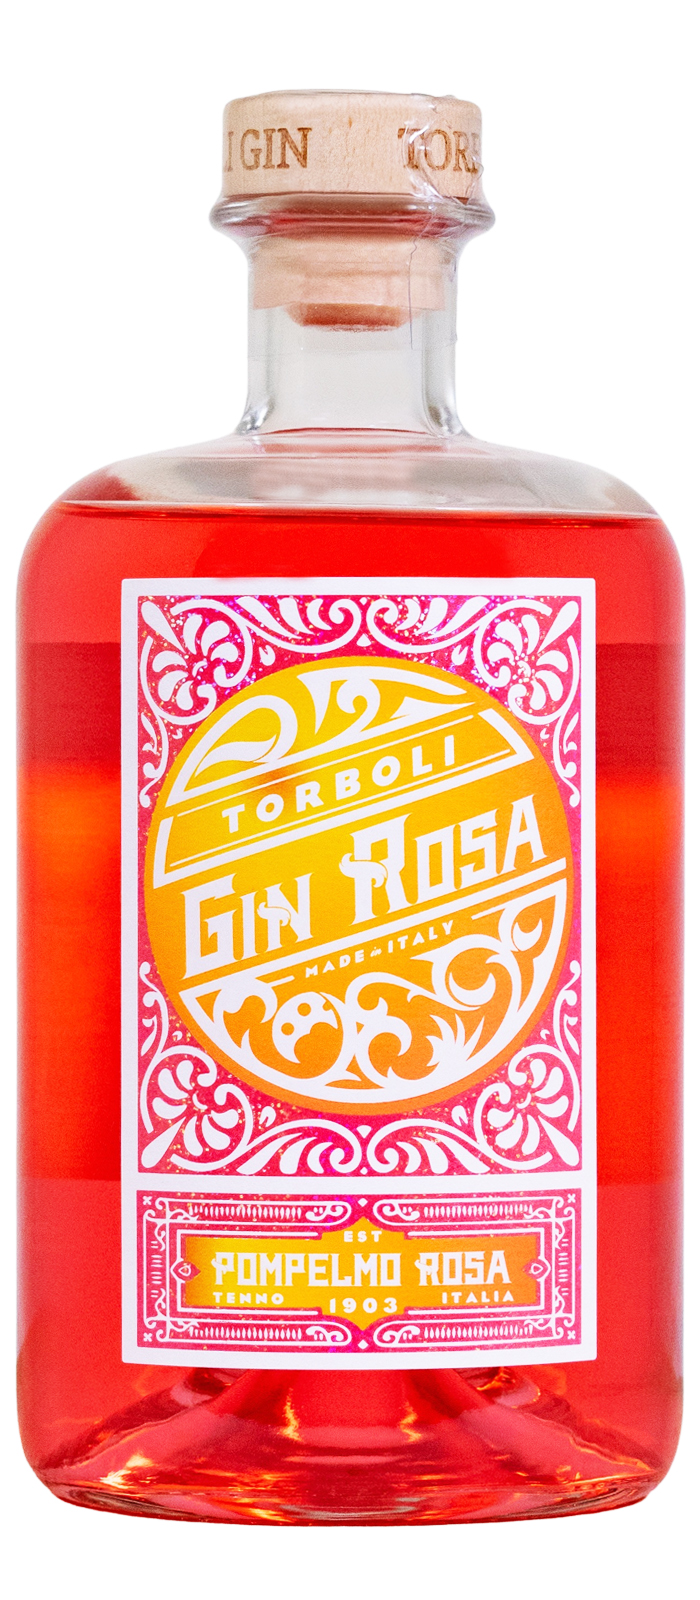 Torboli Gin Rosa Grapefruit - 1 Liter 42% vol